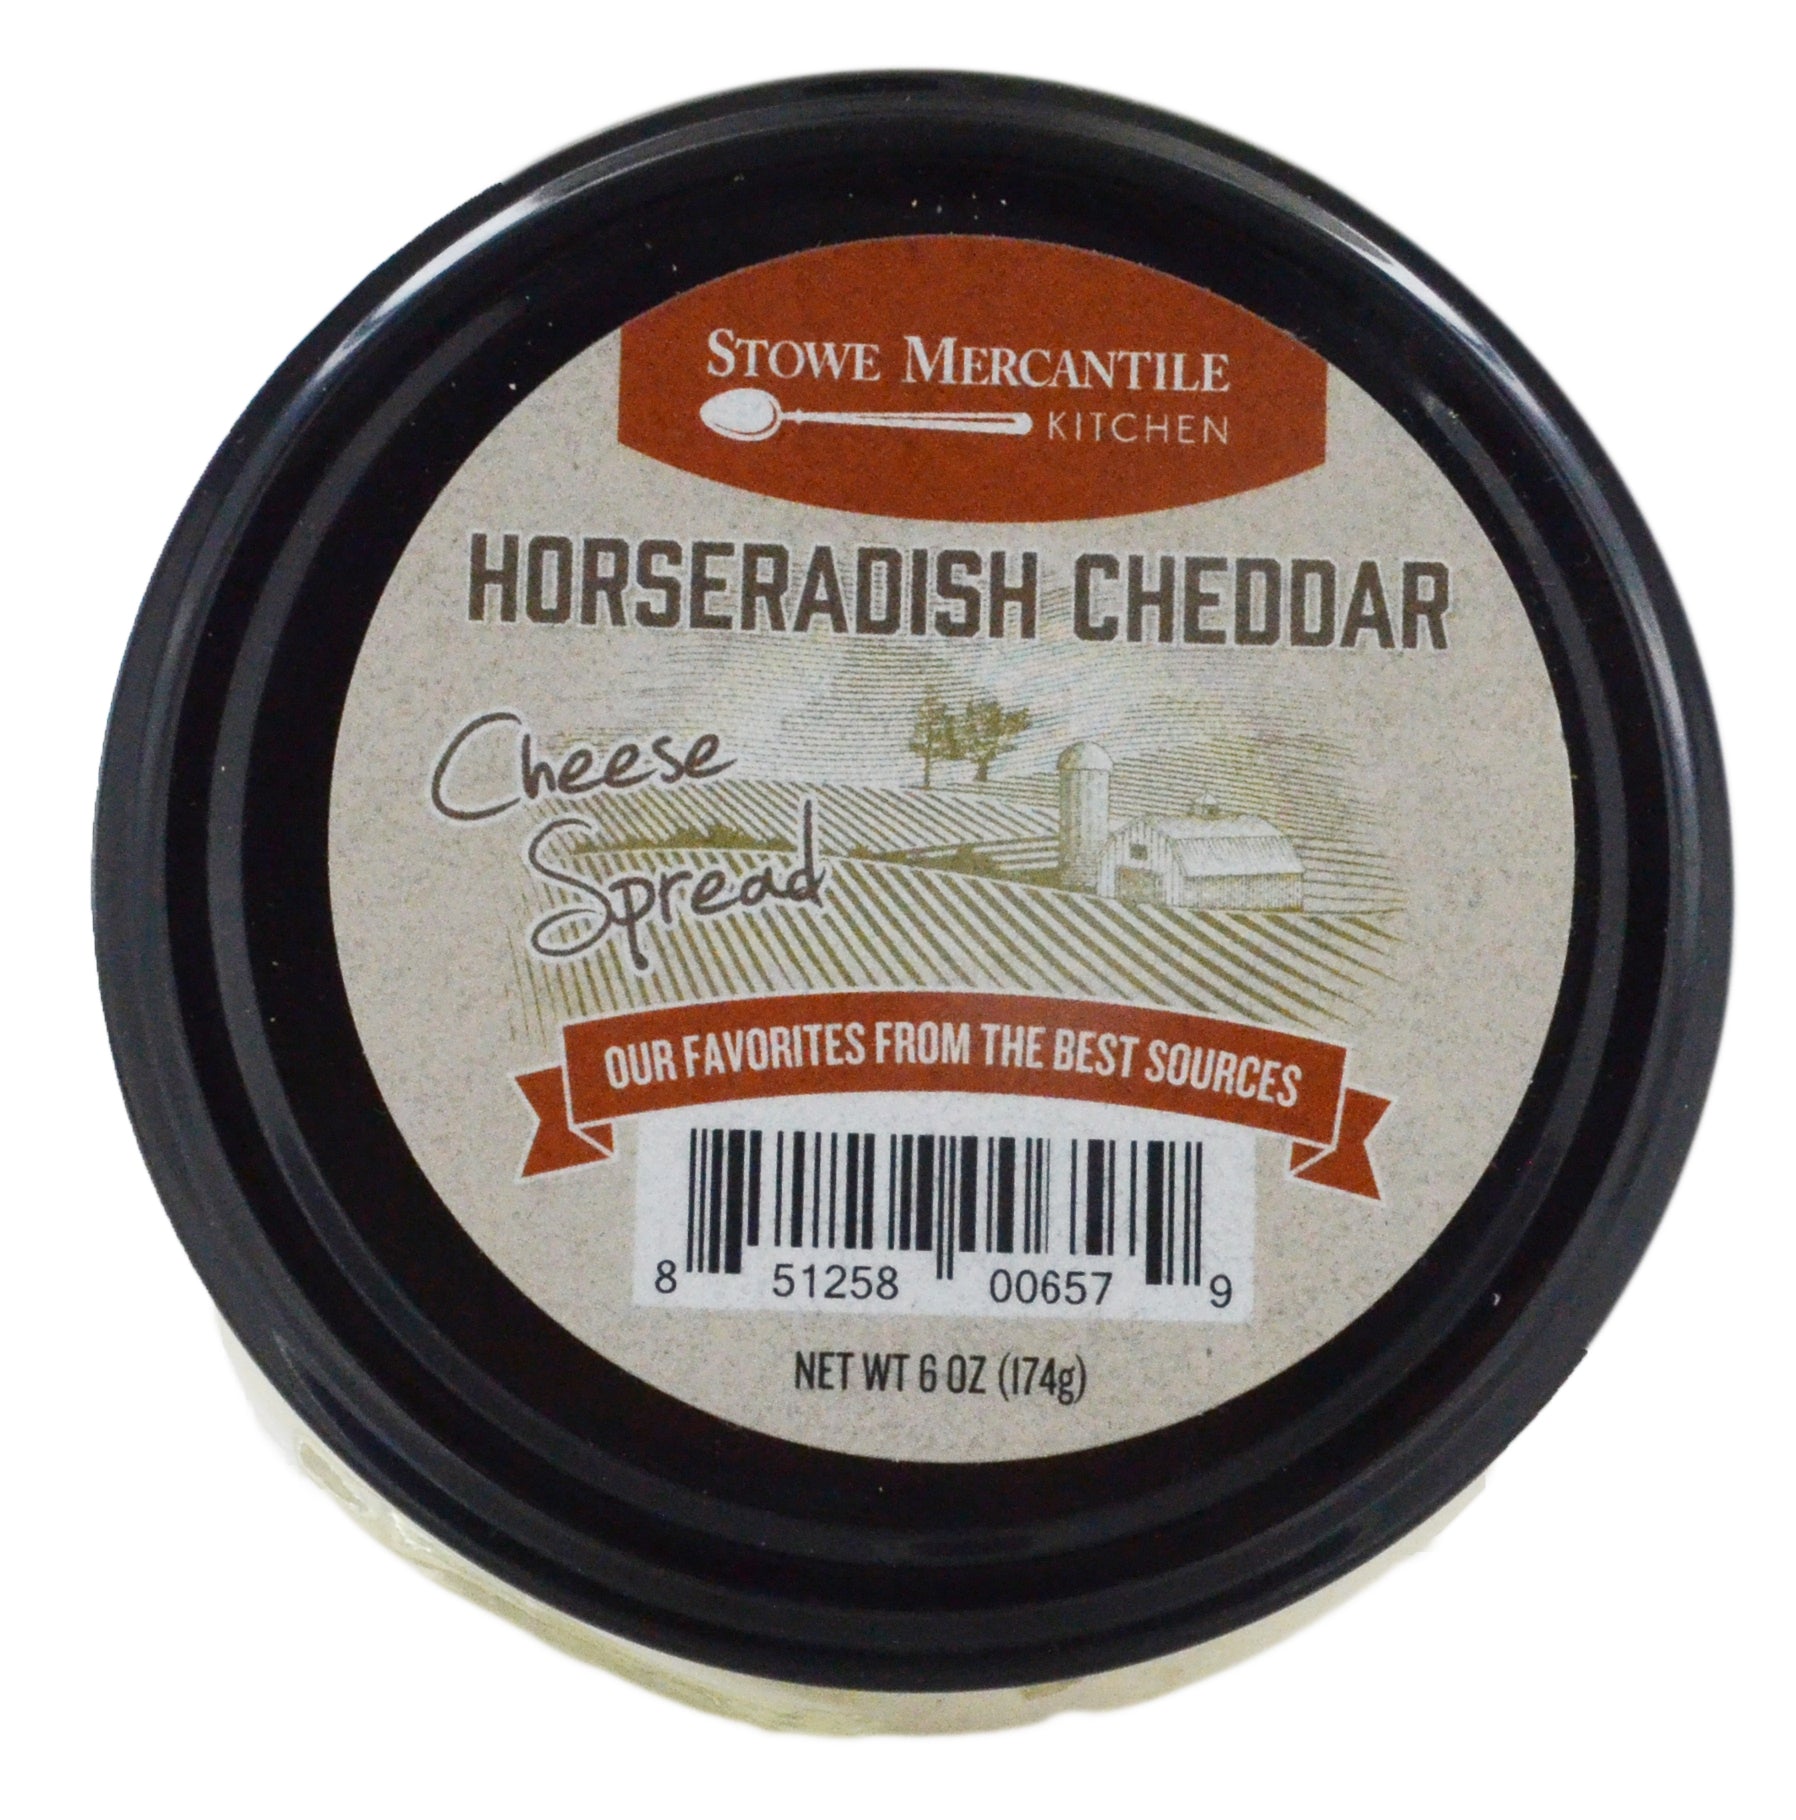 Does Horseradish Need to Be Refrigerated